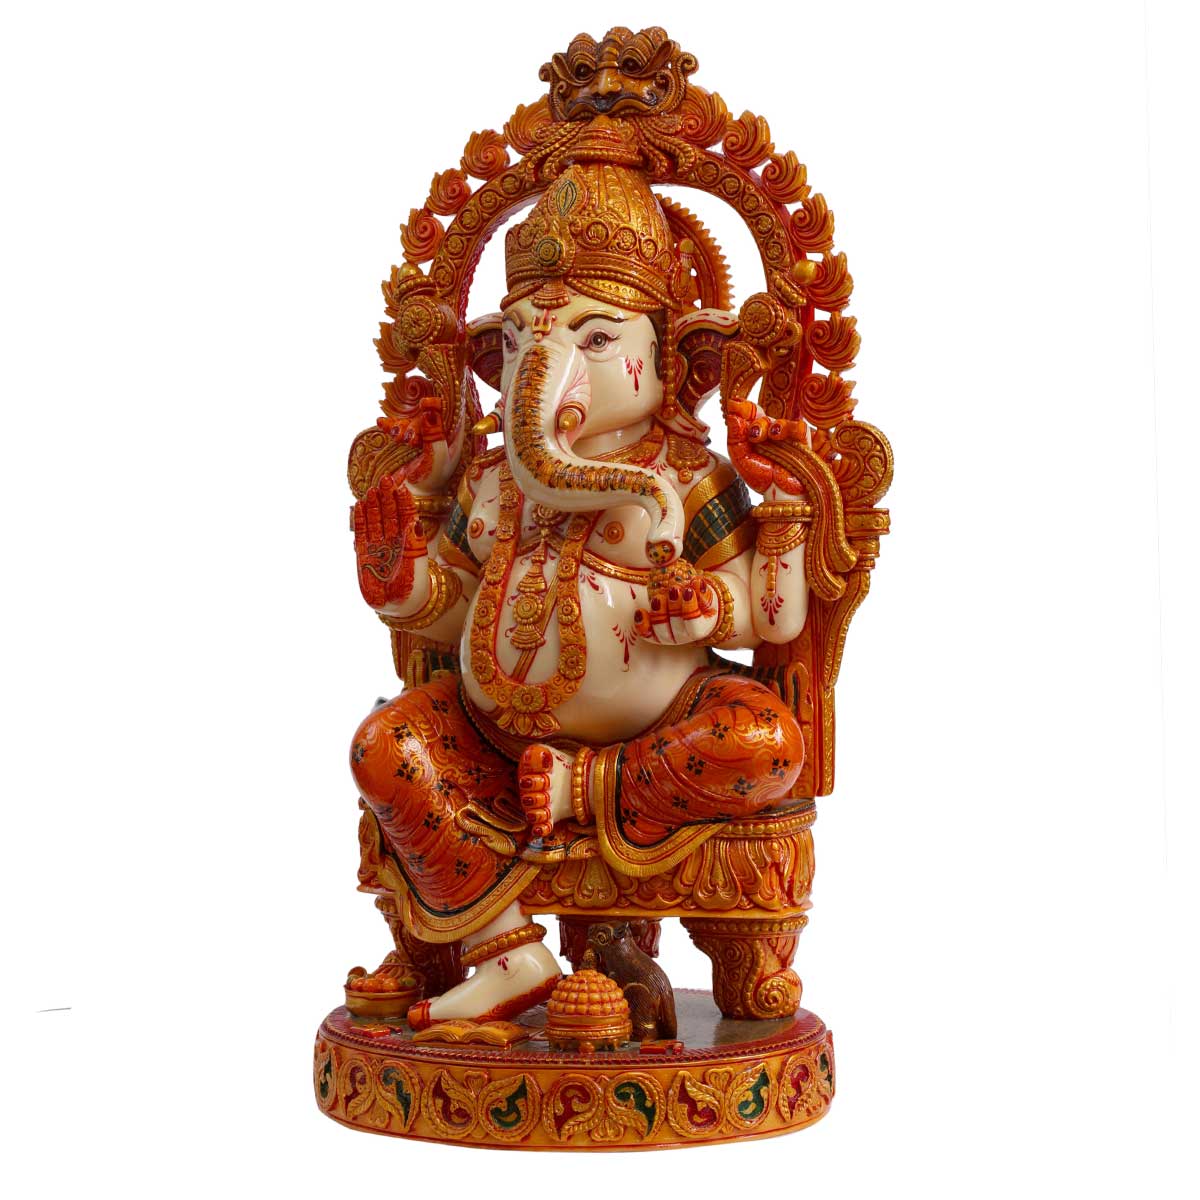 Lord Ganesha south indian treditional idol made of Soft stone - 9 x 6.5 x 16 Inch , 6 Kg